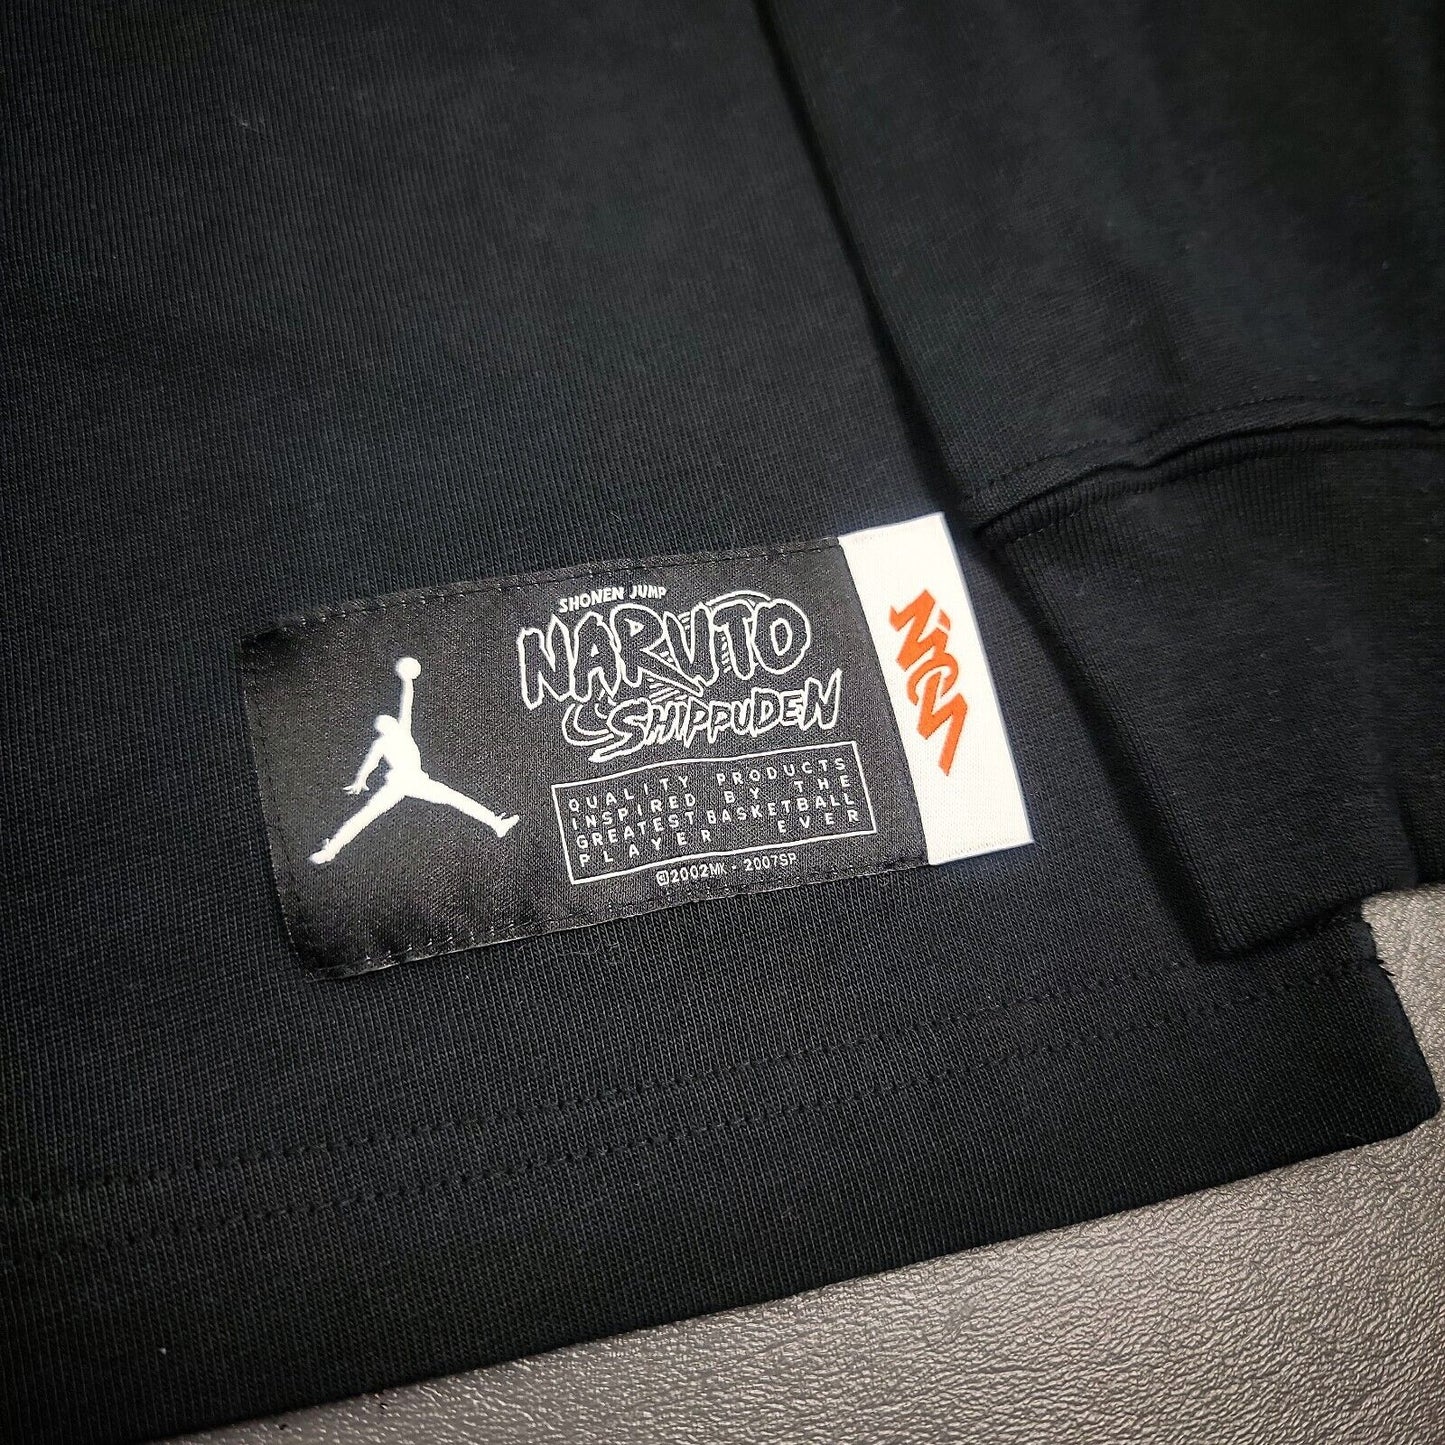 100% Authentic Jordan Brand Zion x Naruto LS Shirt Black Mens M